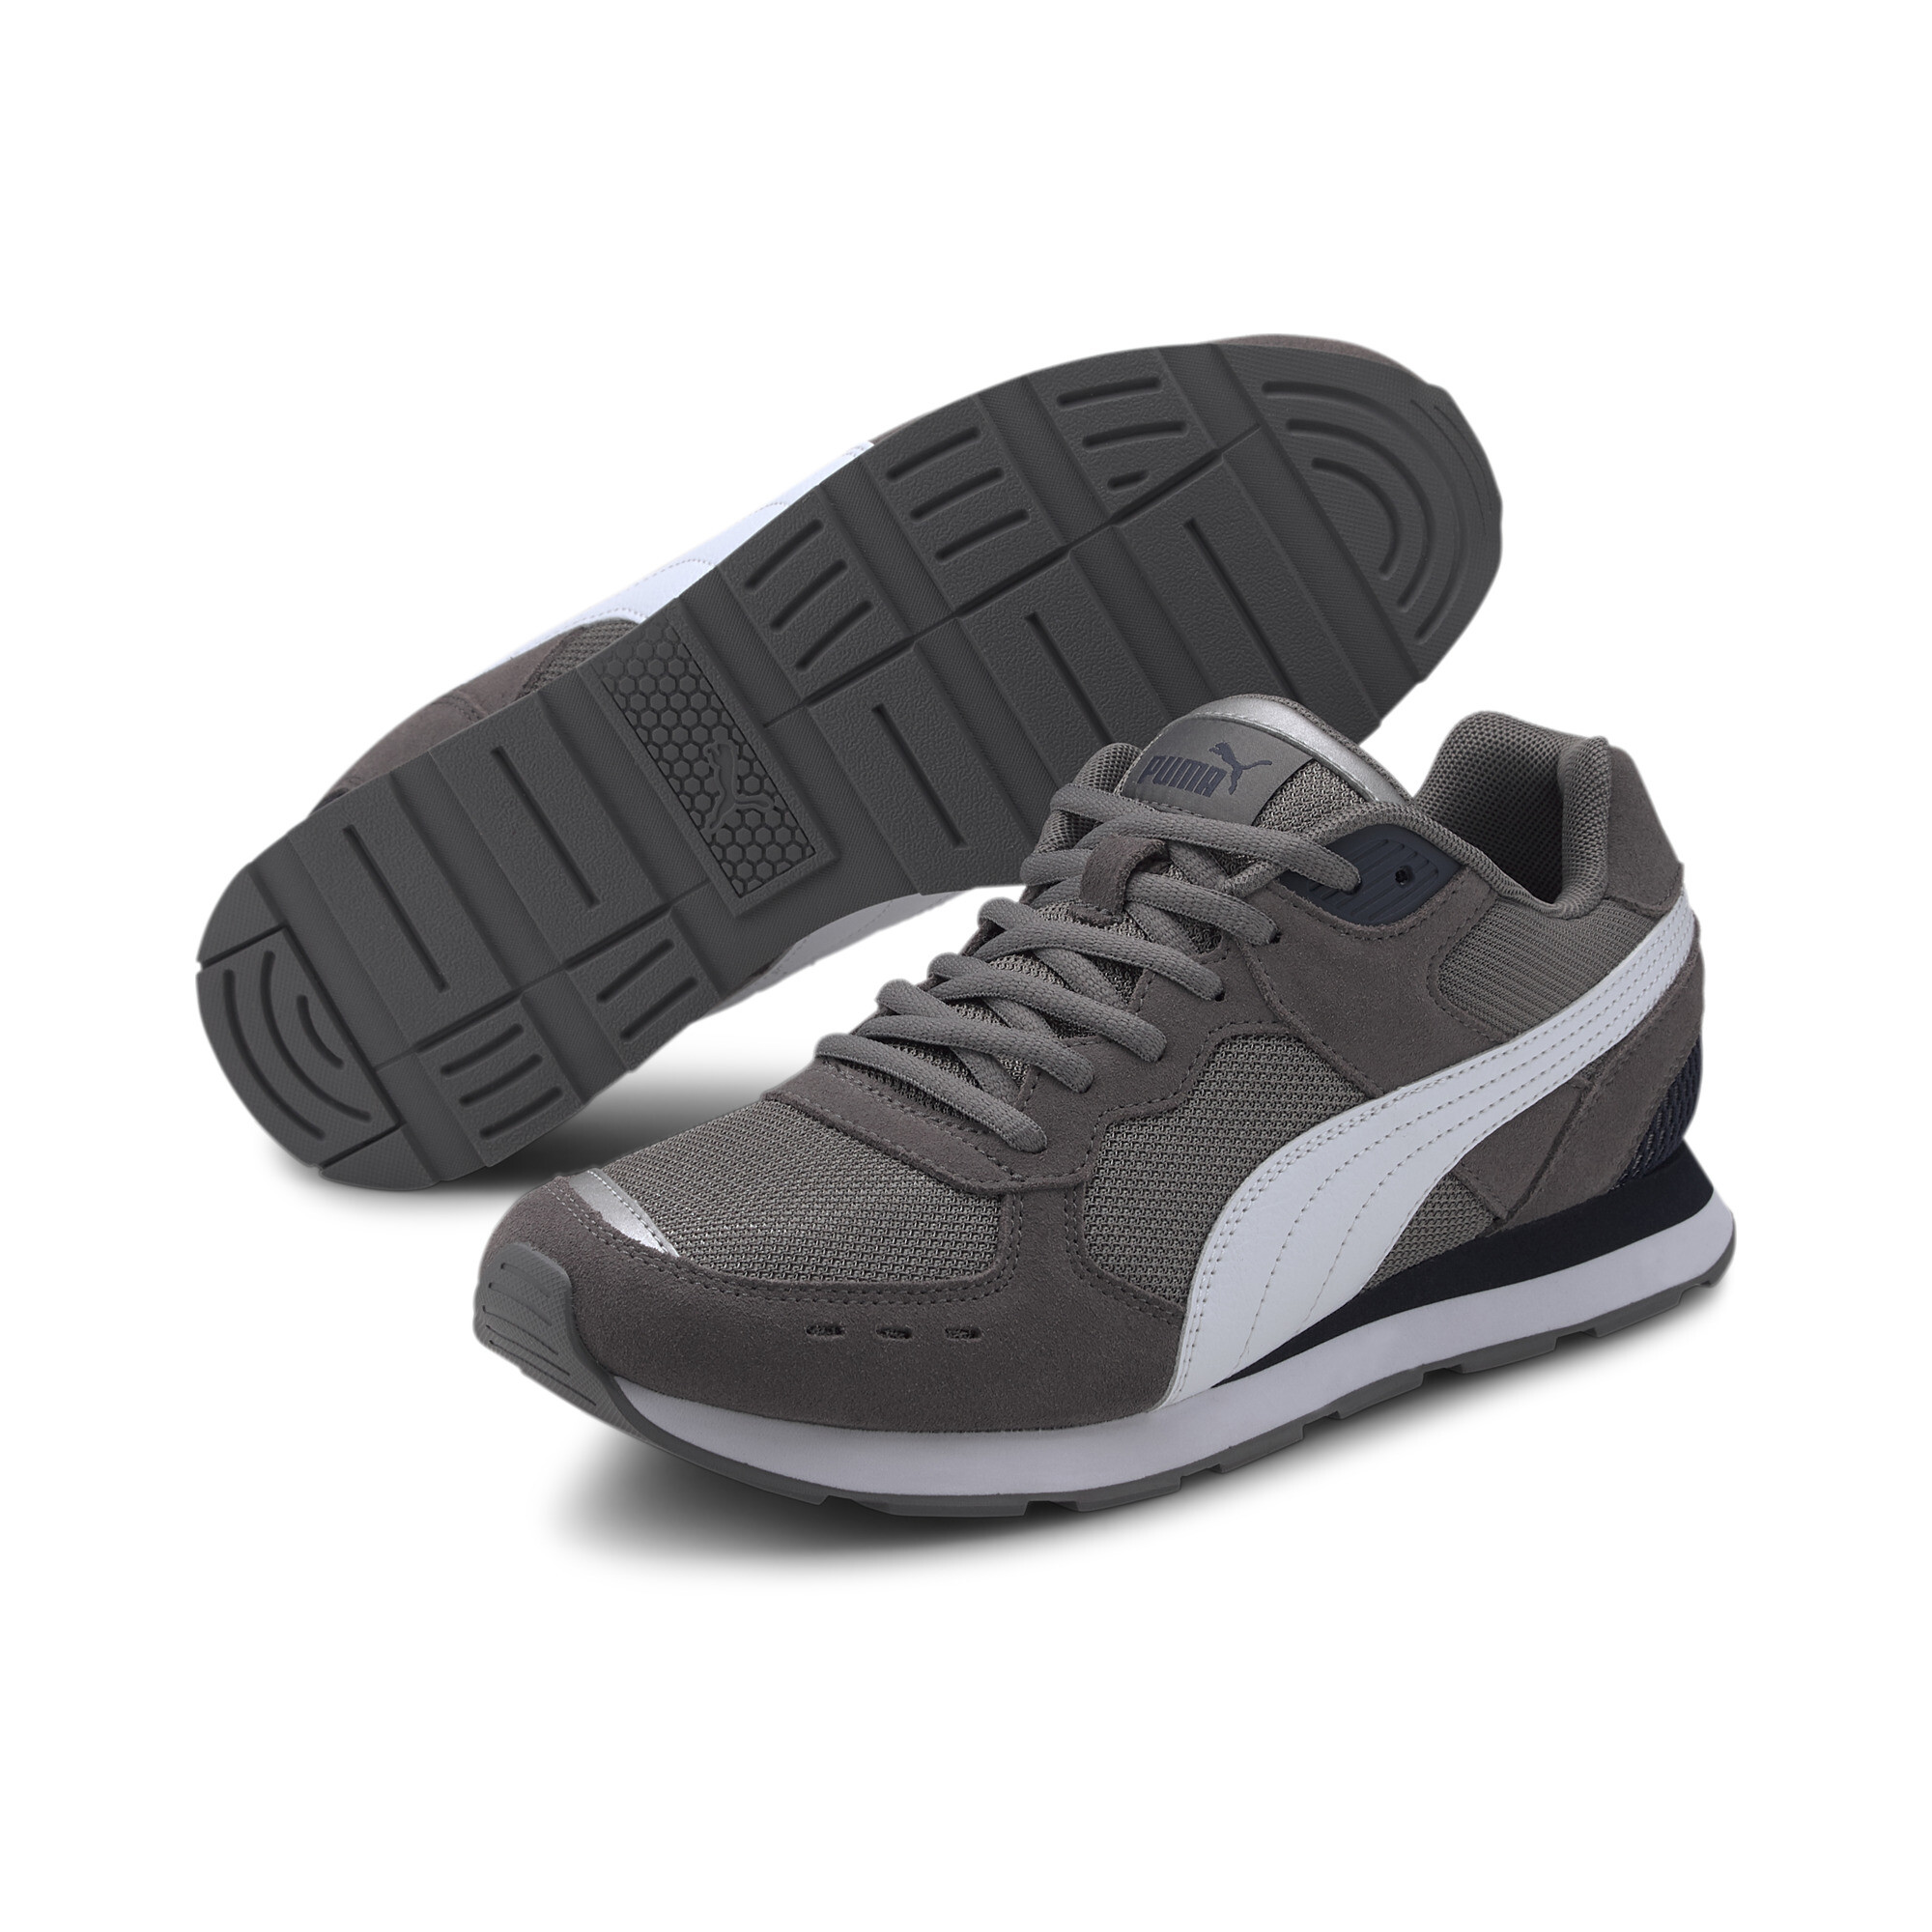 PUMA Men's Vista Sneakers | eBay